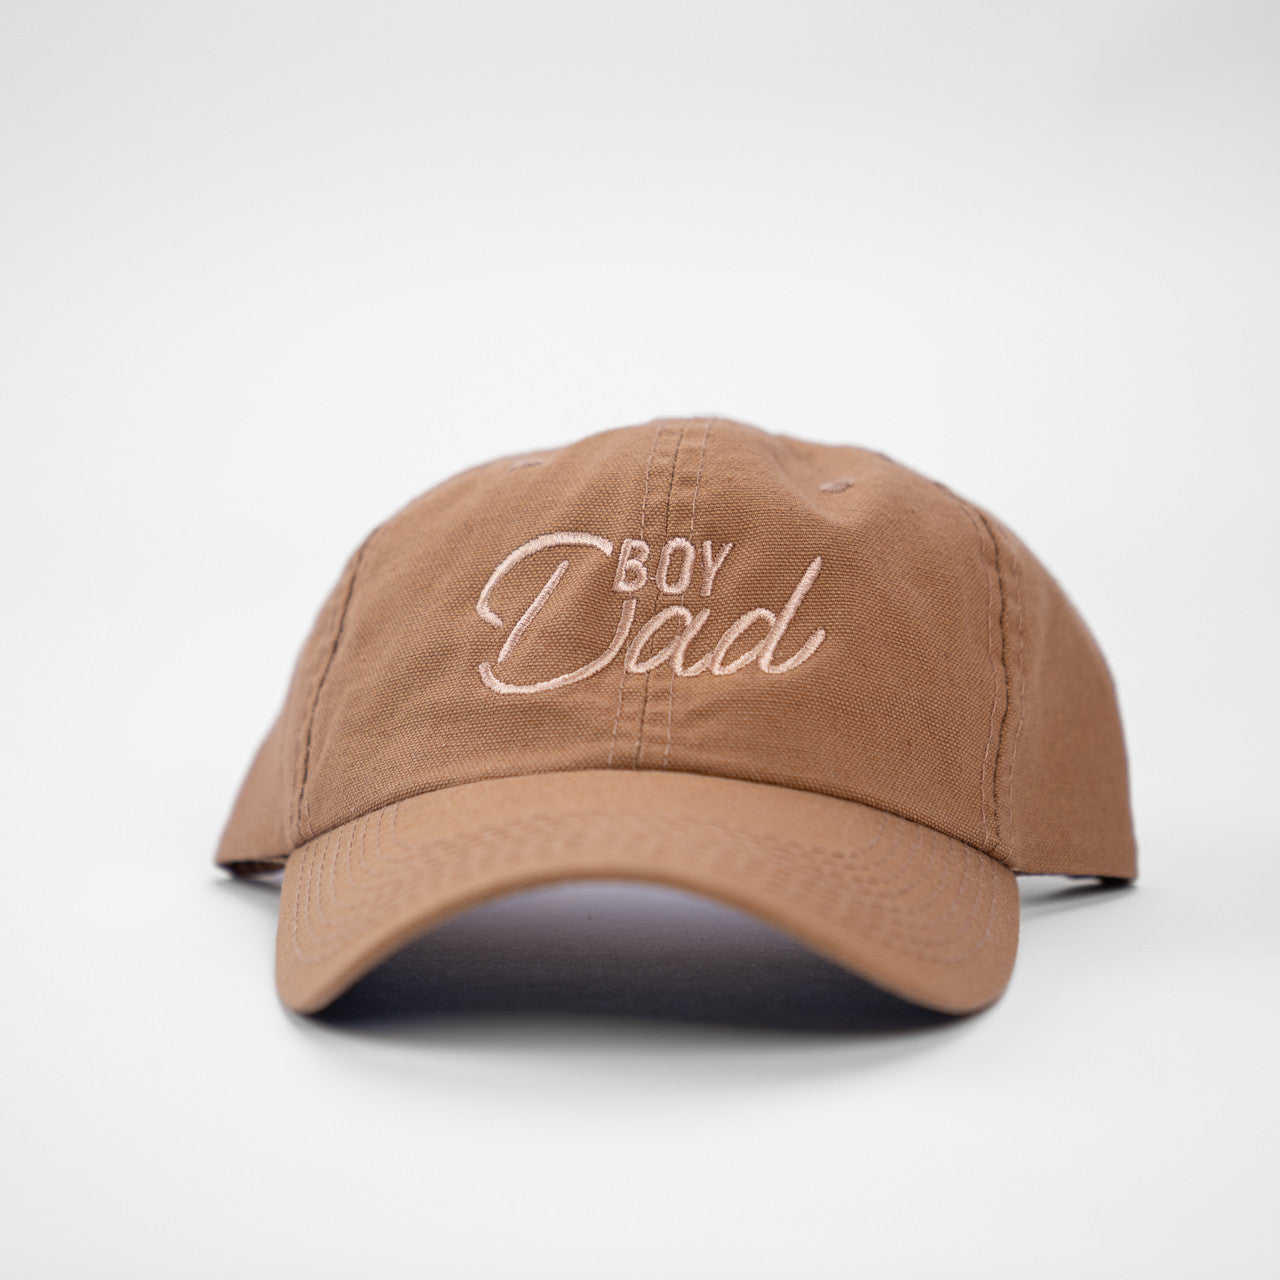 Girl Dad® (Ace, Apricot) - Baseball Hat (Camel)